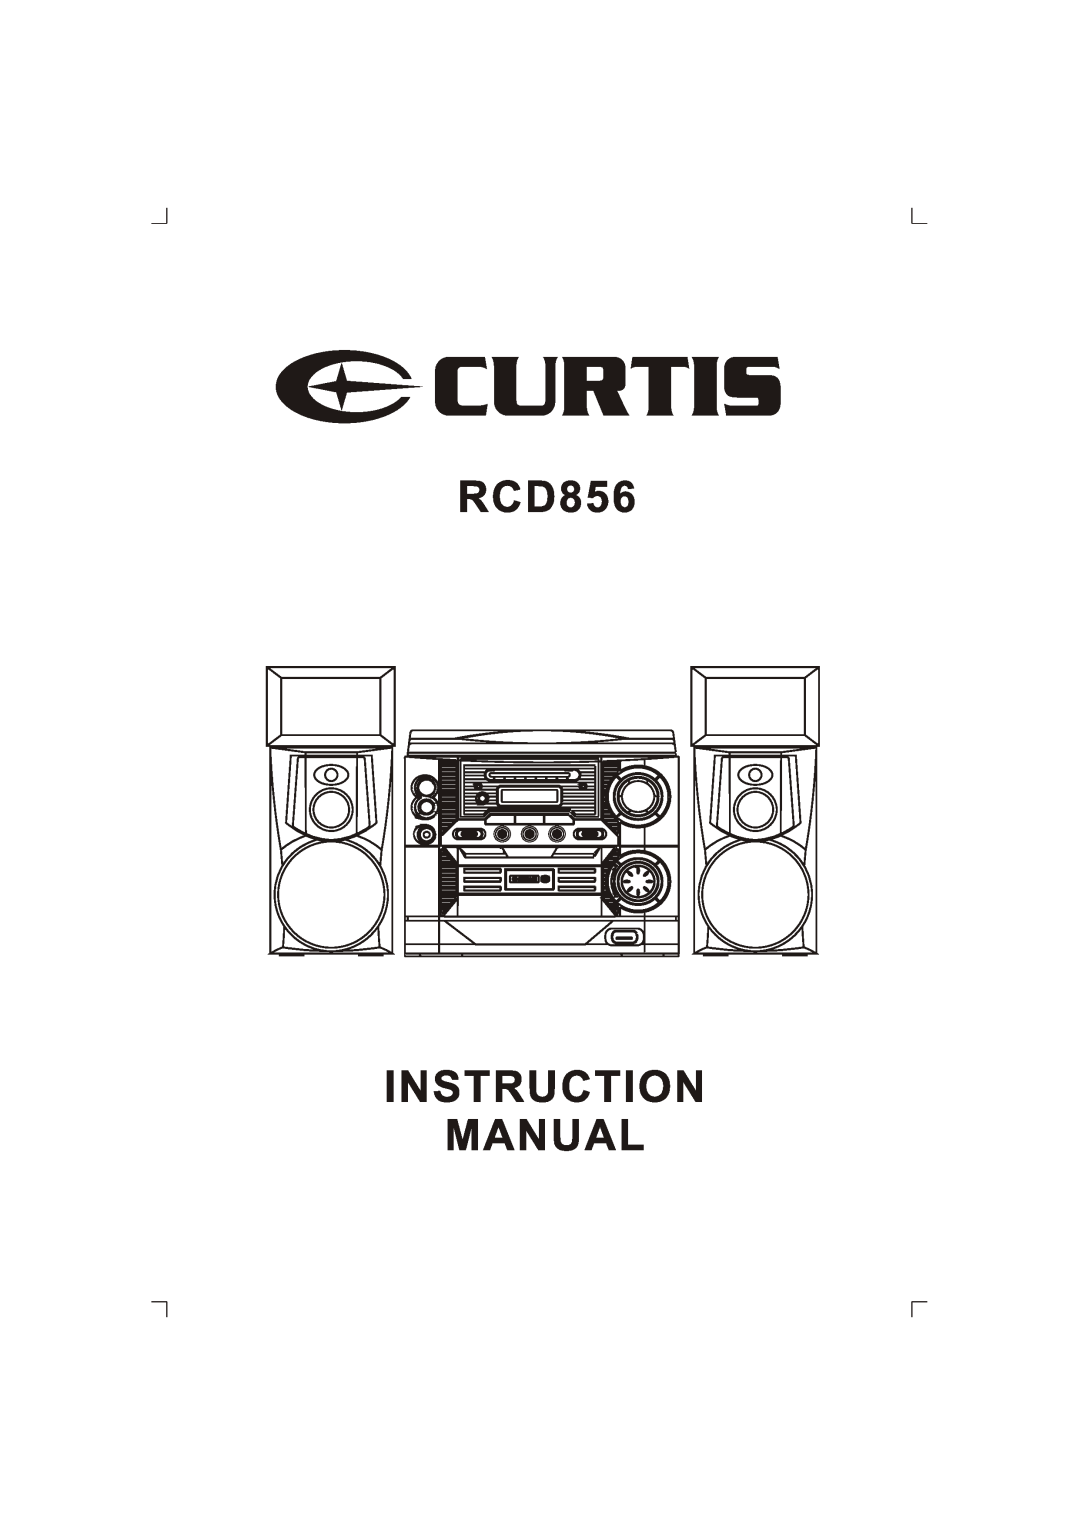 Curtis RCD856 manual 